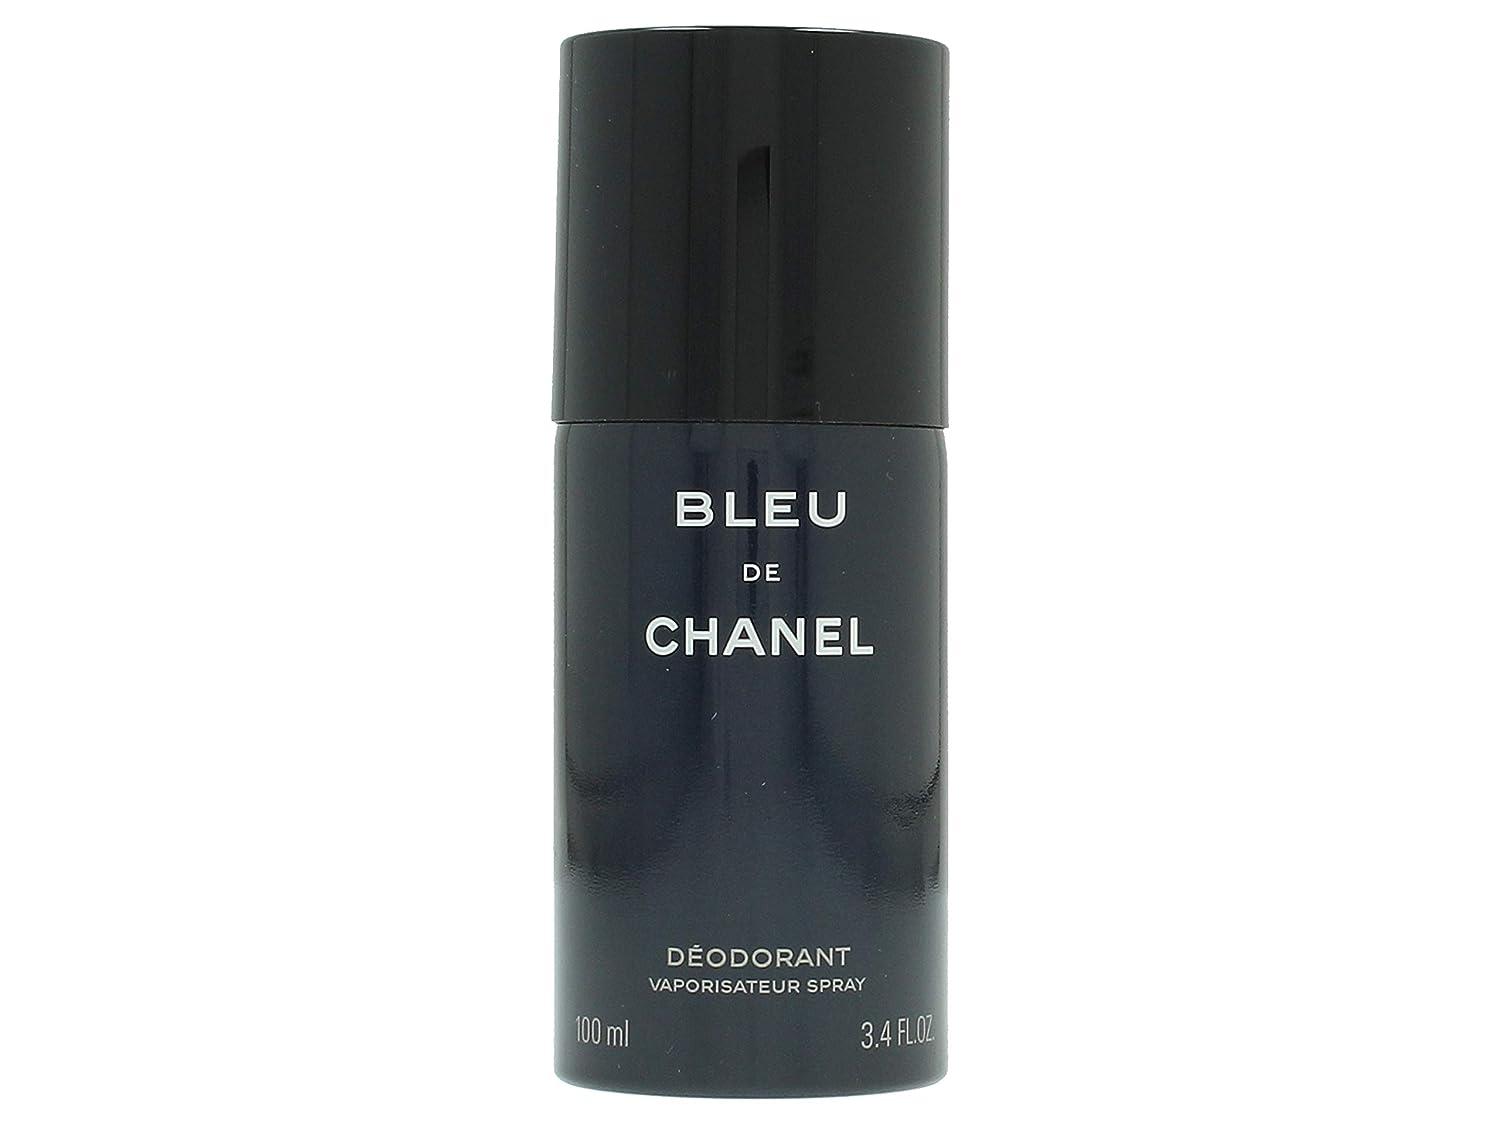 Bleu De Chanel by Chanel for Men - 3.4 oz Deodorant Spray